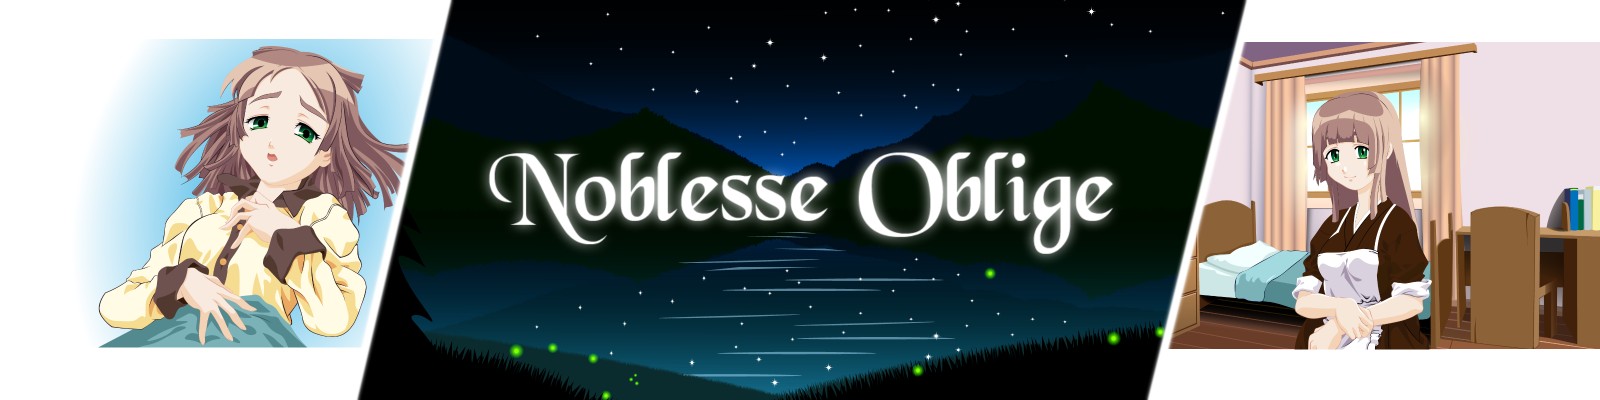 Noblesse Oblige Adult Game Android Apk Download (7)